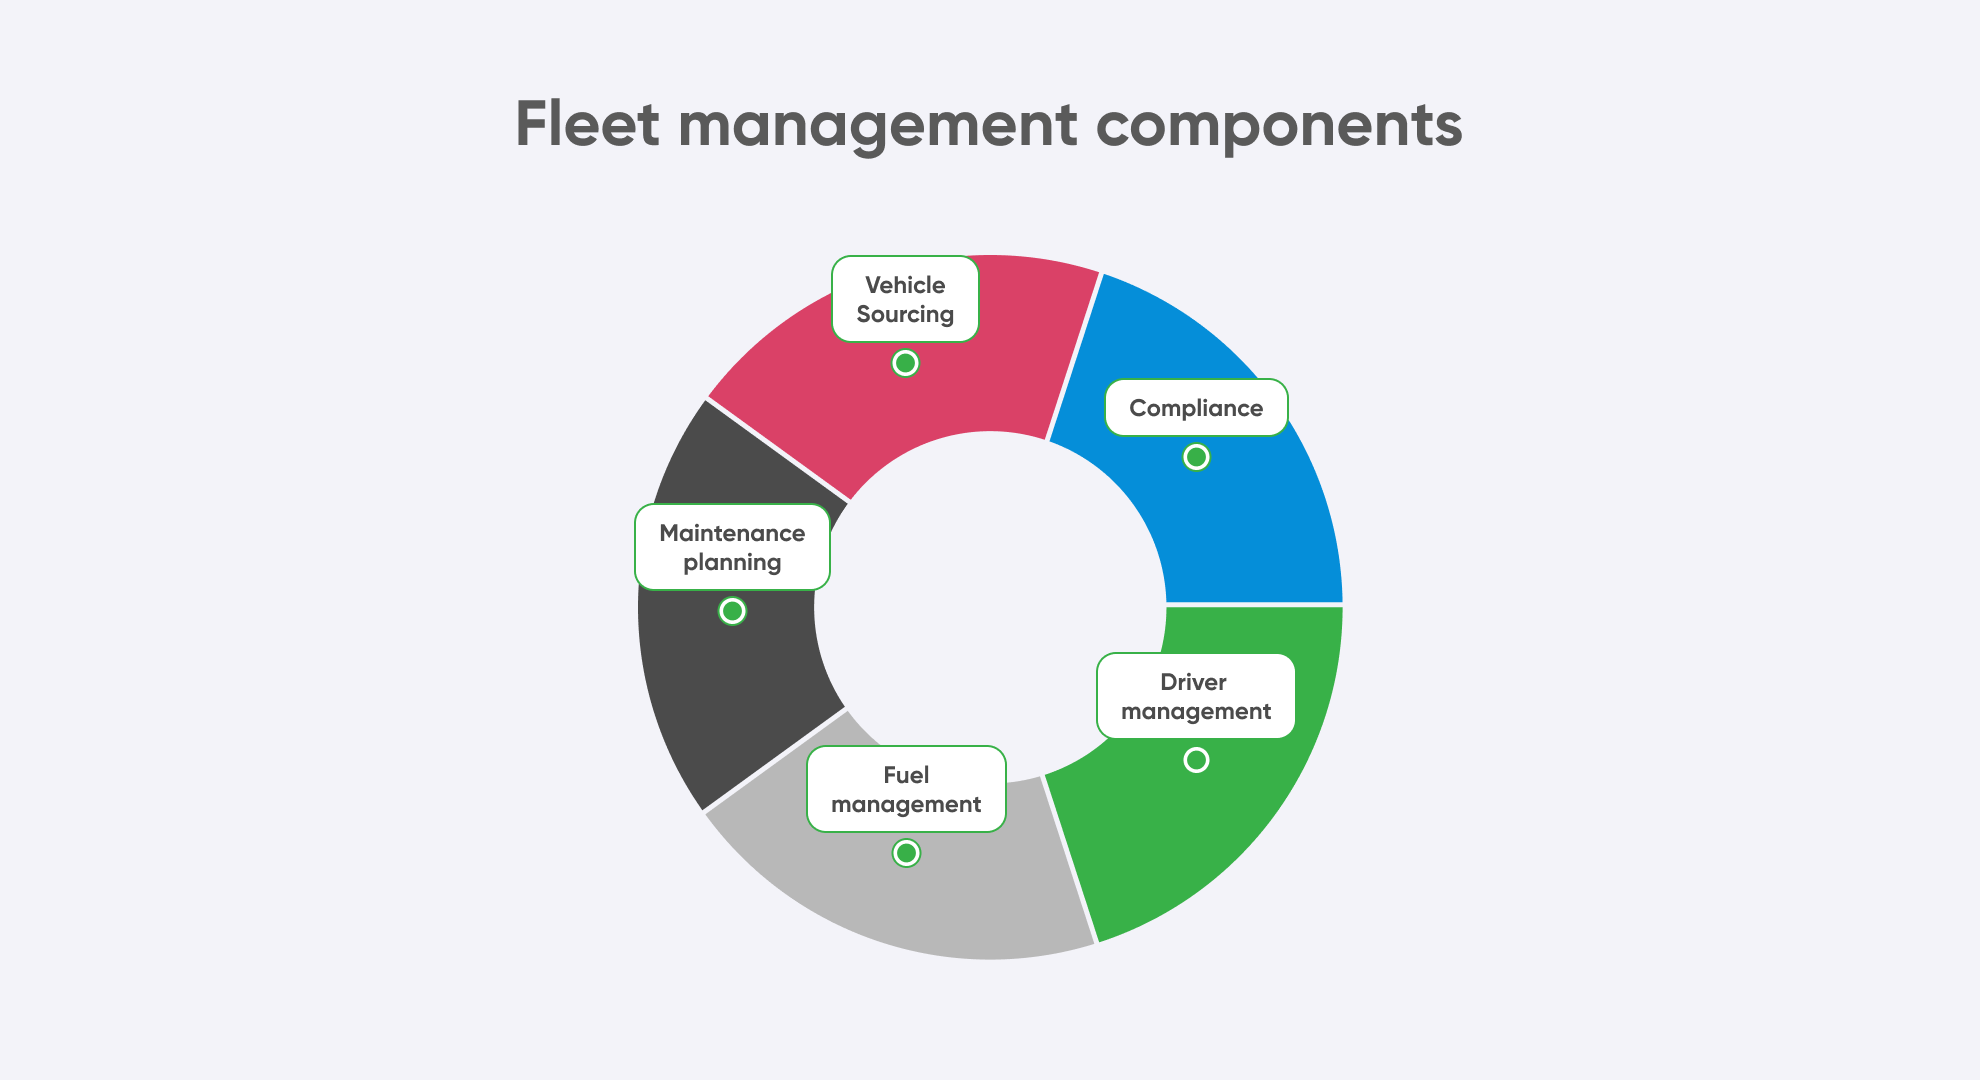 Fleet management components diagram